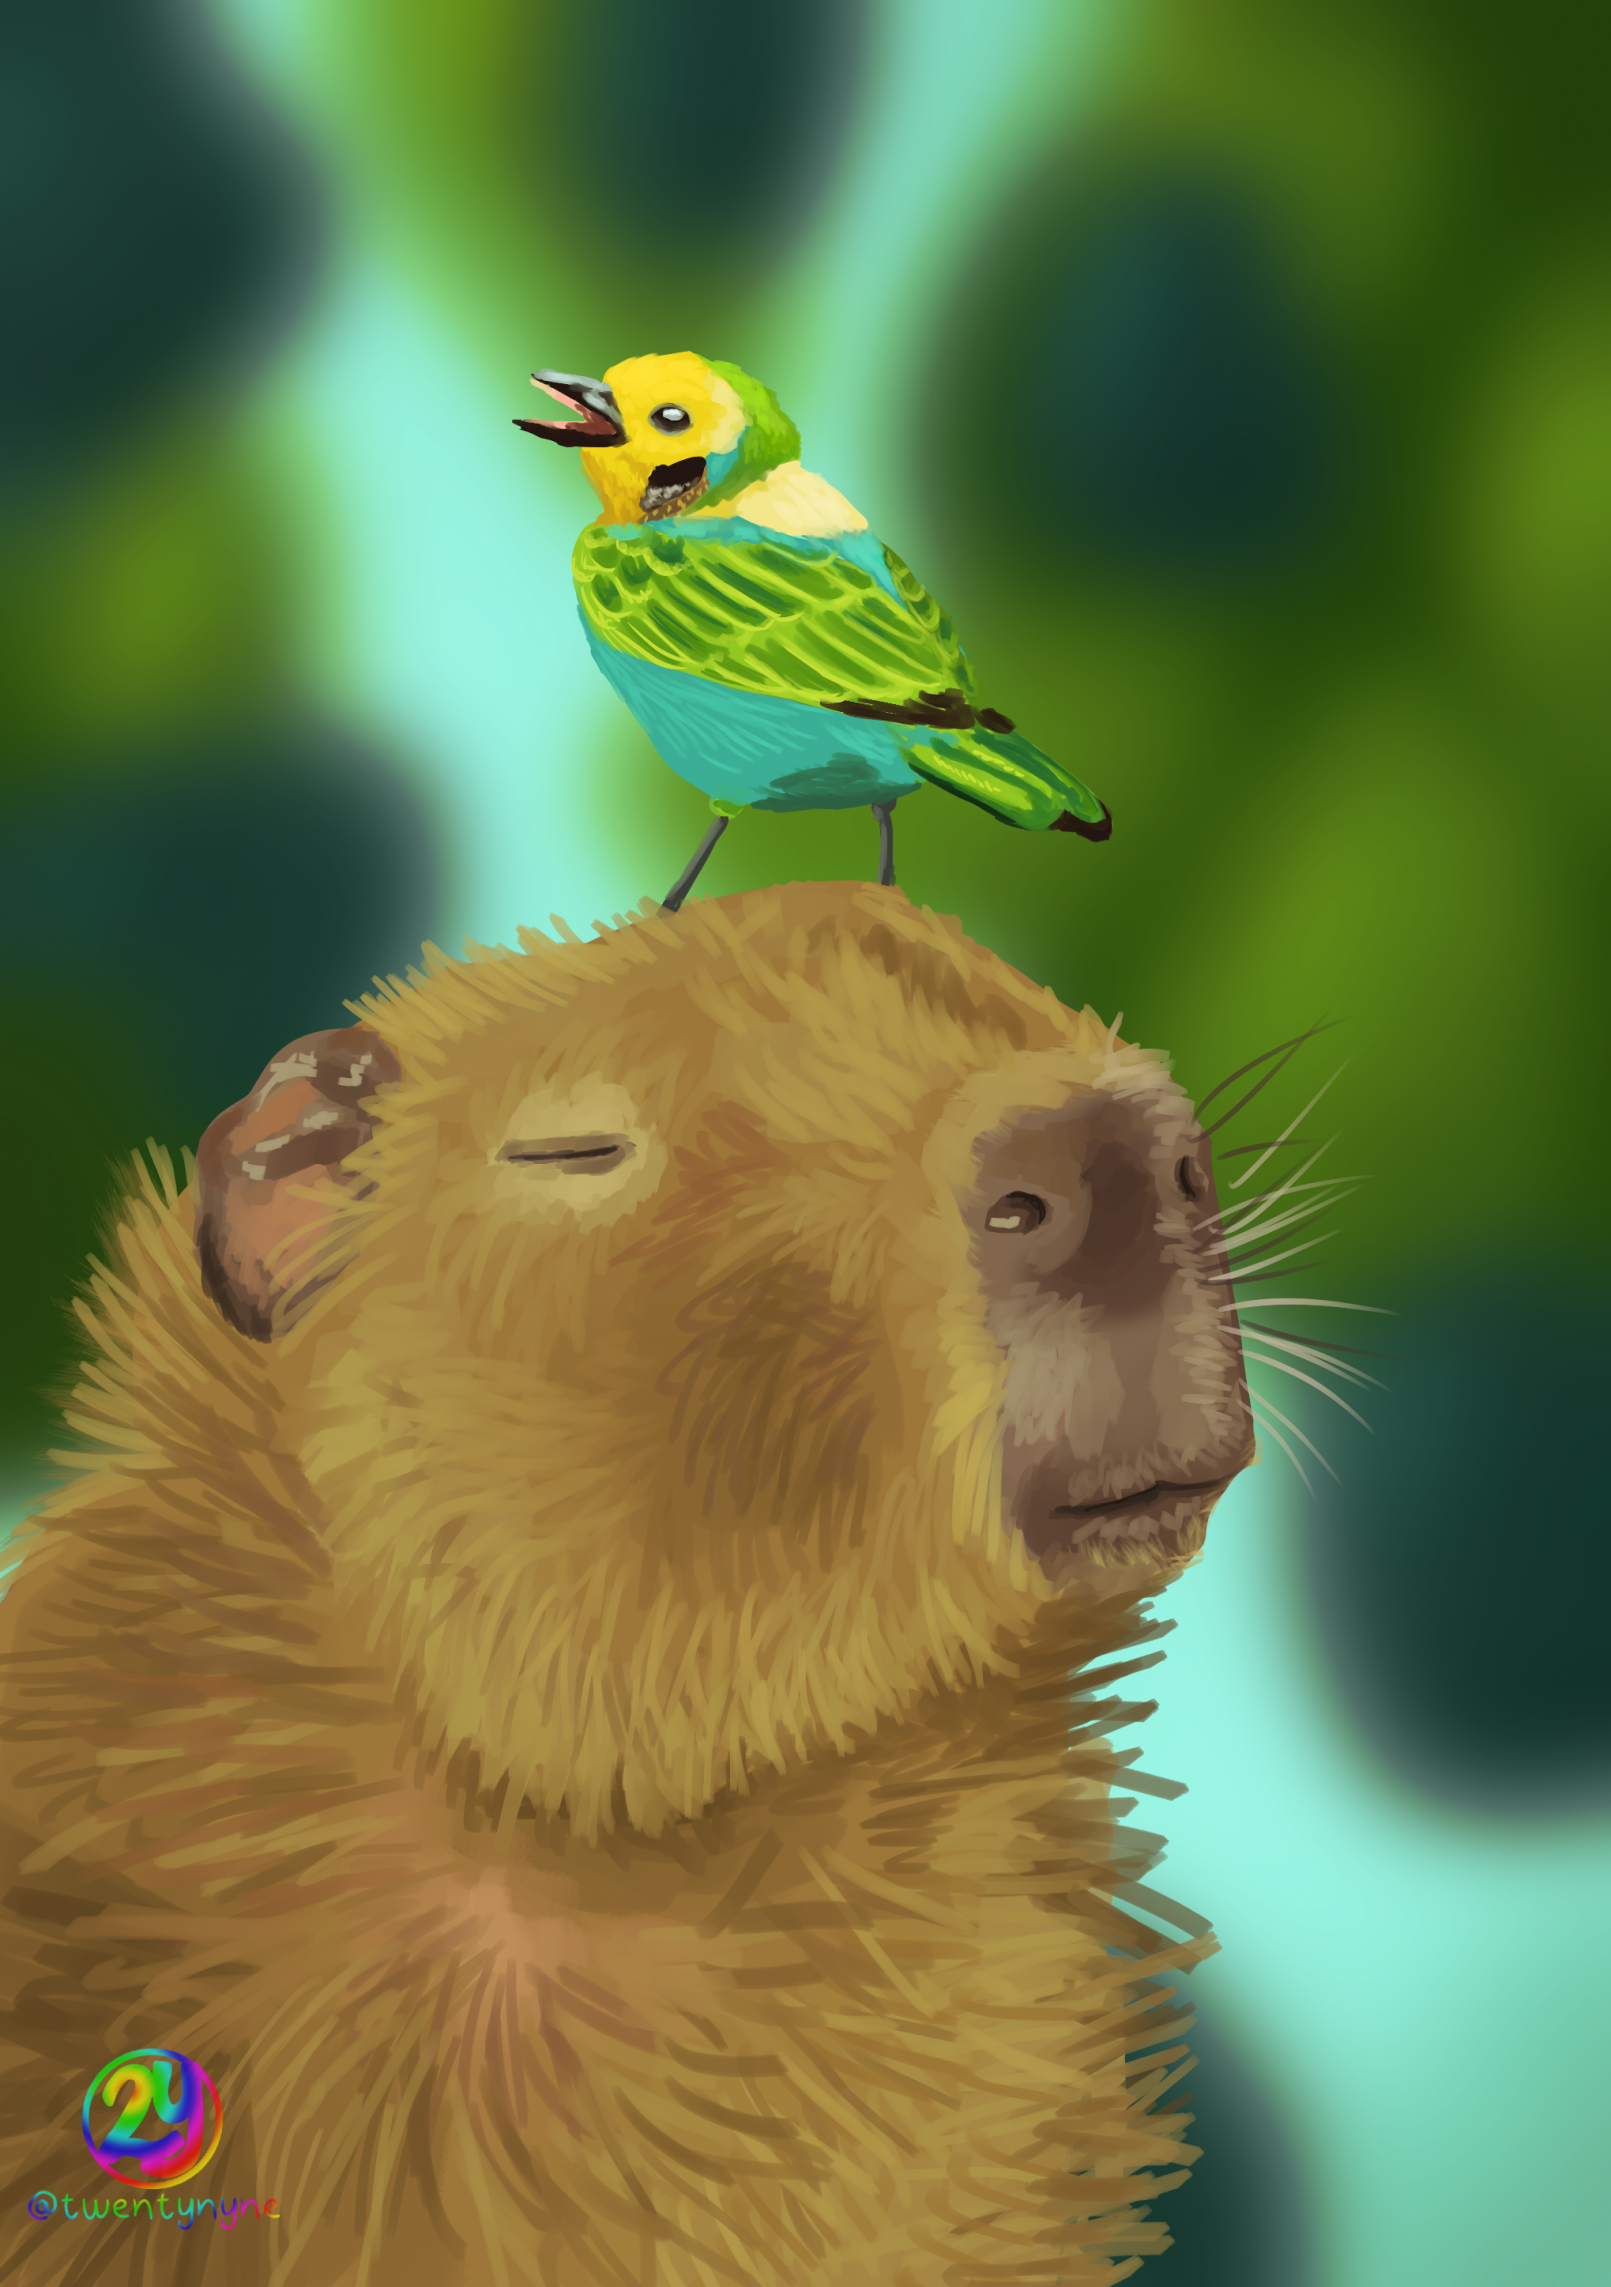 capybara by E-a-s-y on DeviantArt  Animal illustration, Capybara, Cute  animal drawings